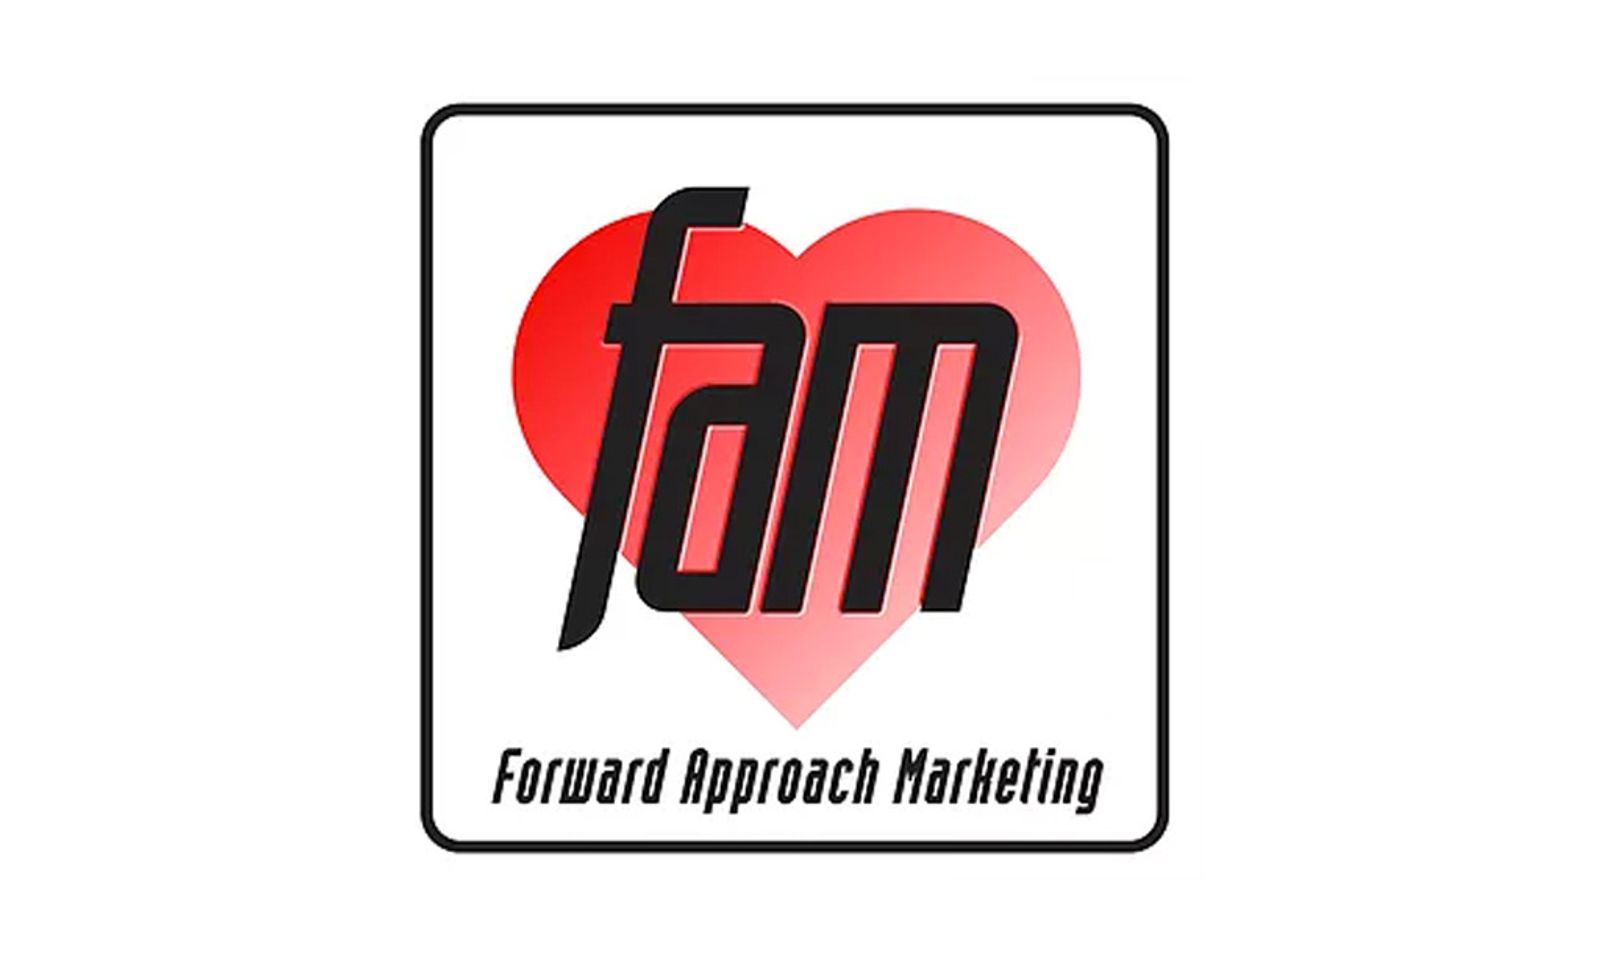 FineAss Marketing Rebrands as Forward Approach Marketing